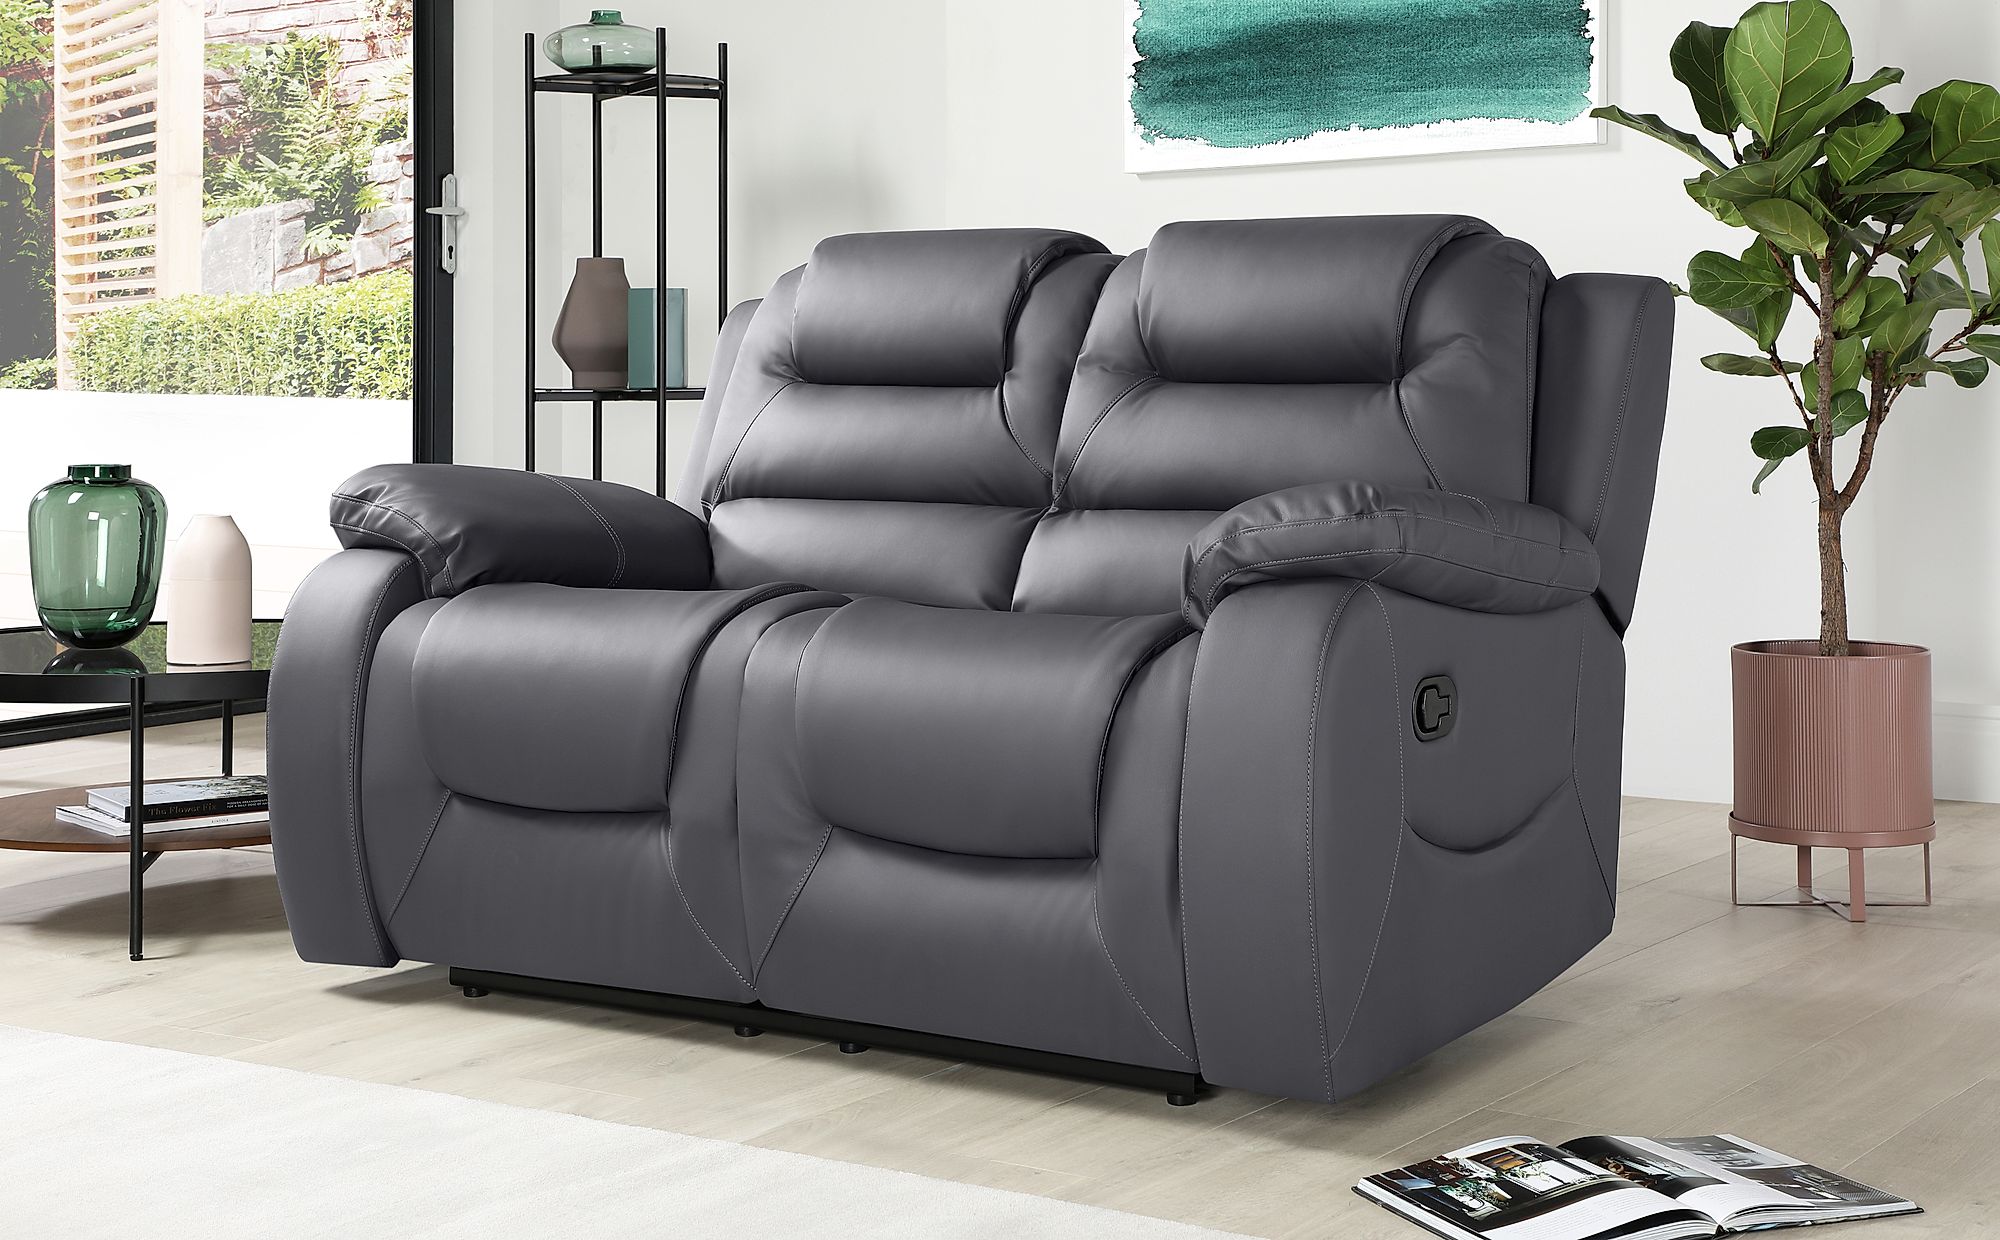 large leather recliner sofa set